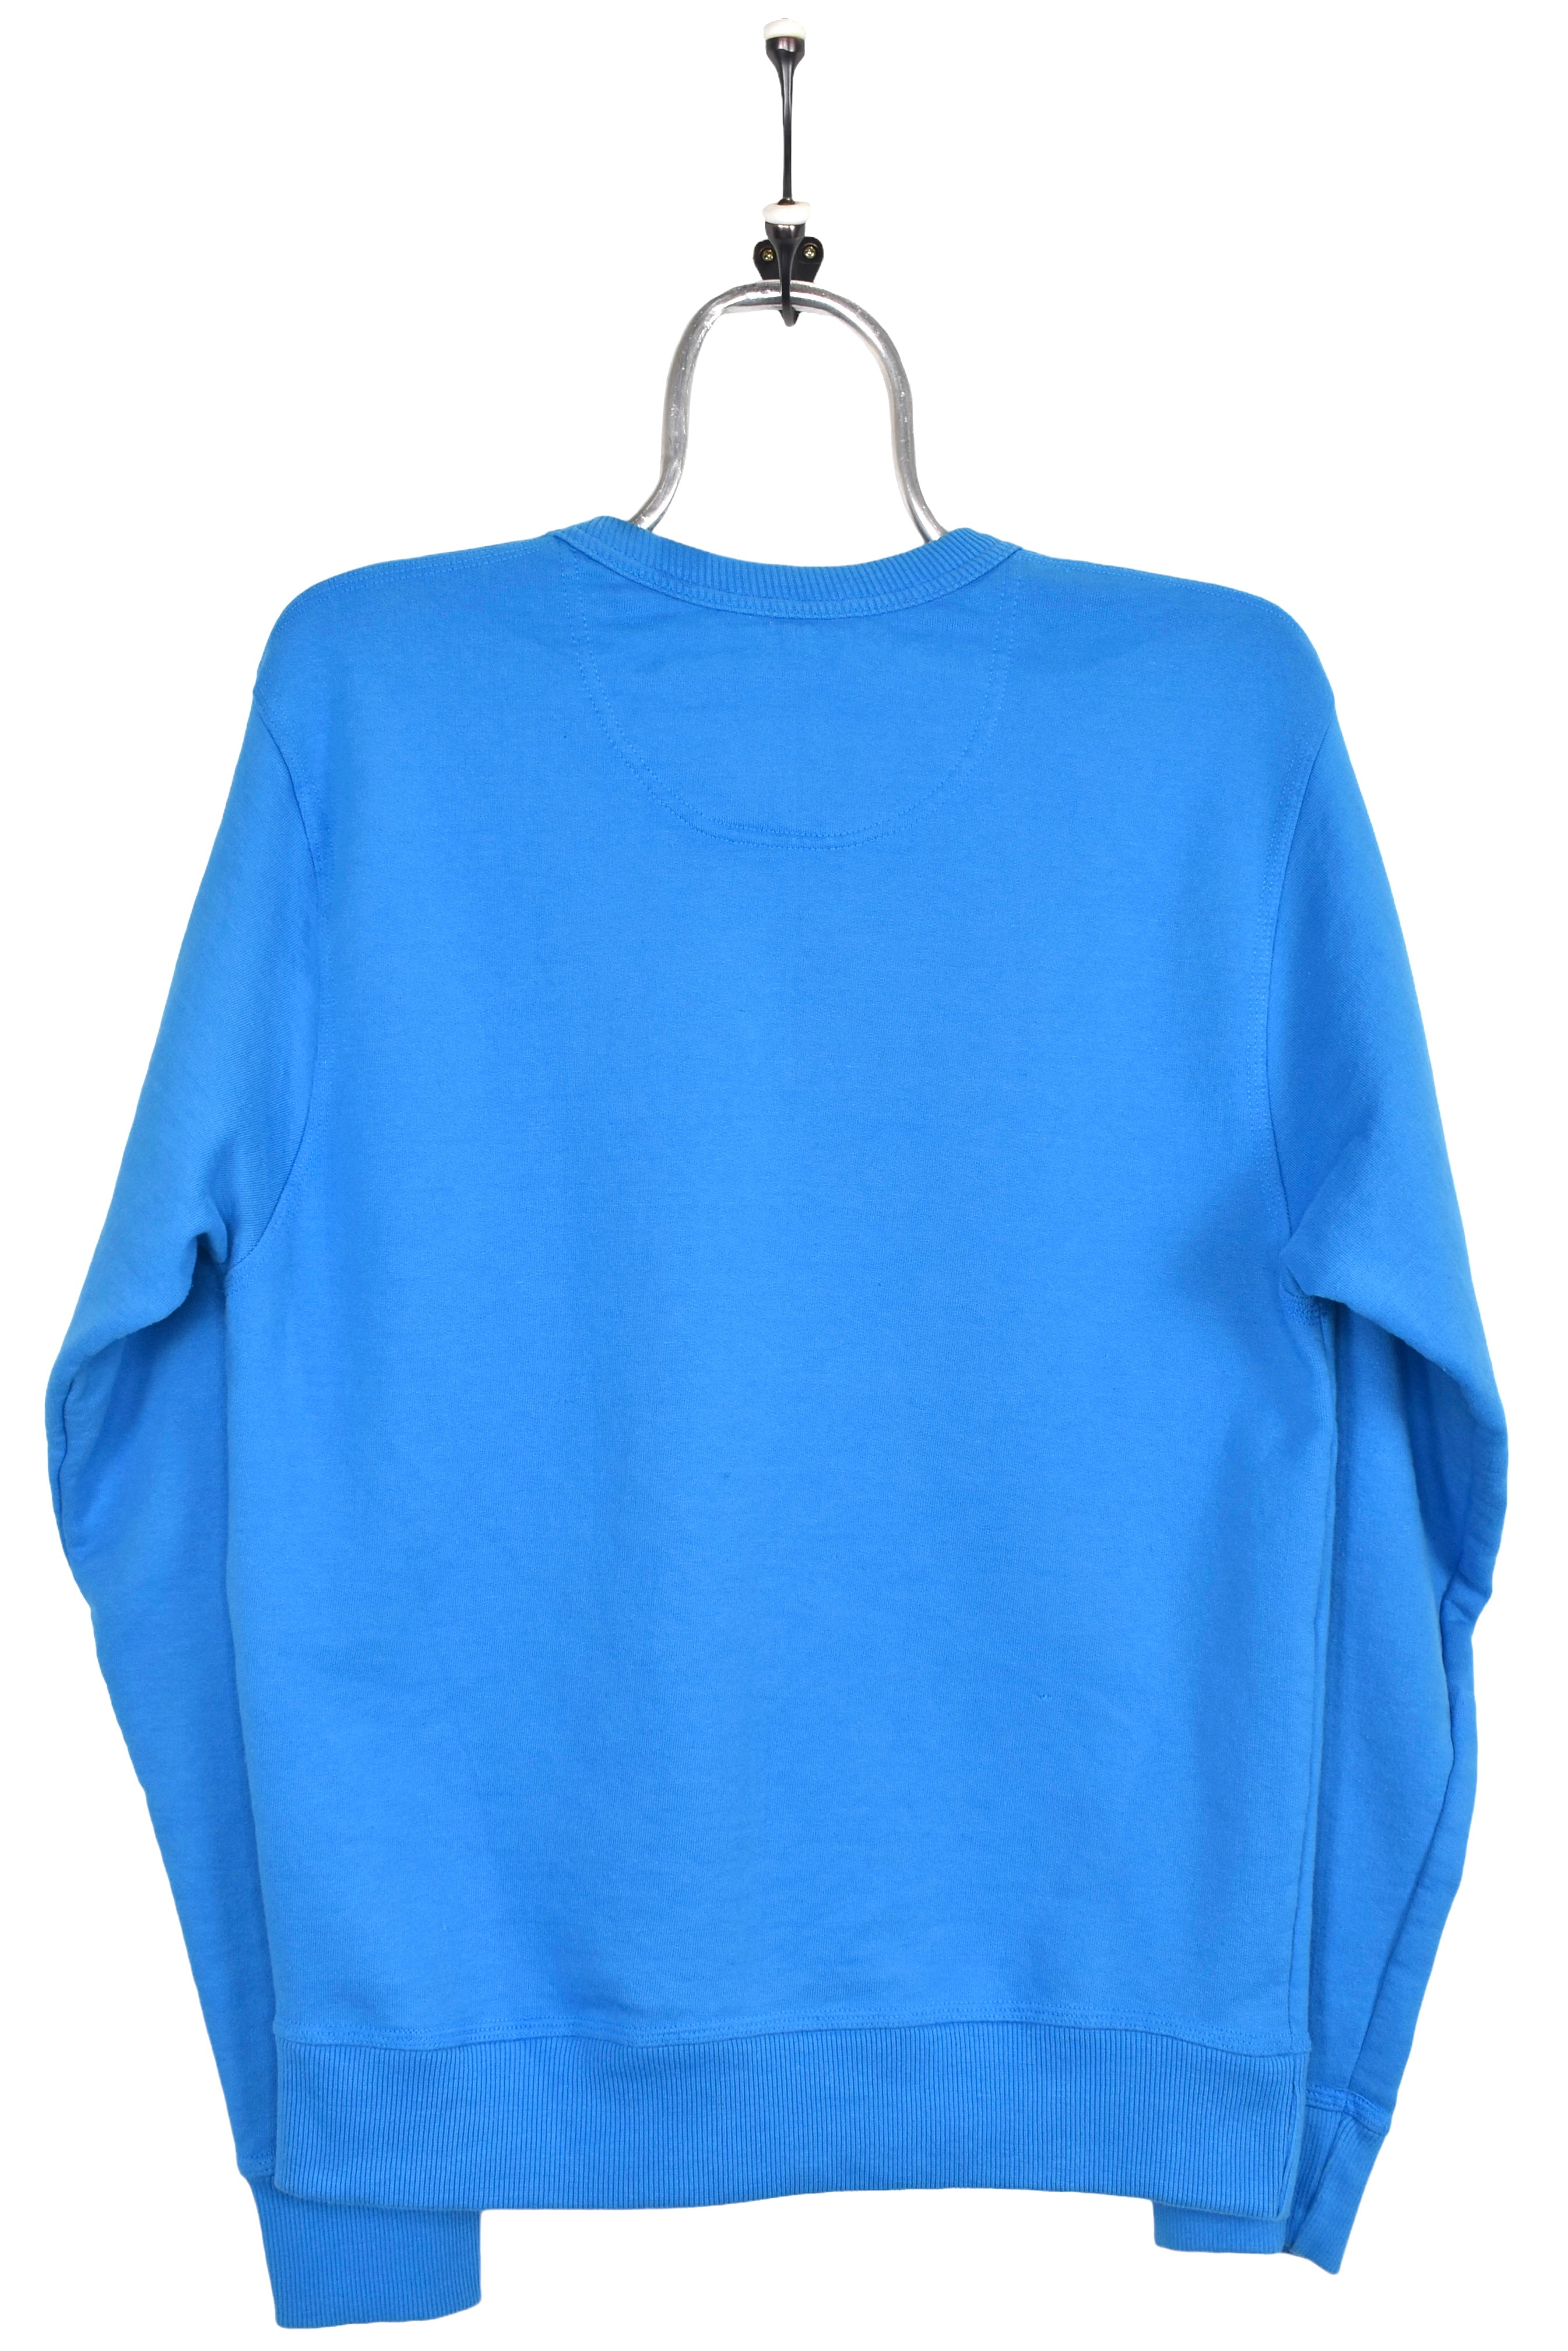 Modern Champion sweatshirt, blue embroidered crewneck - Small